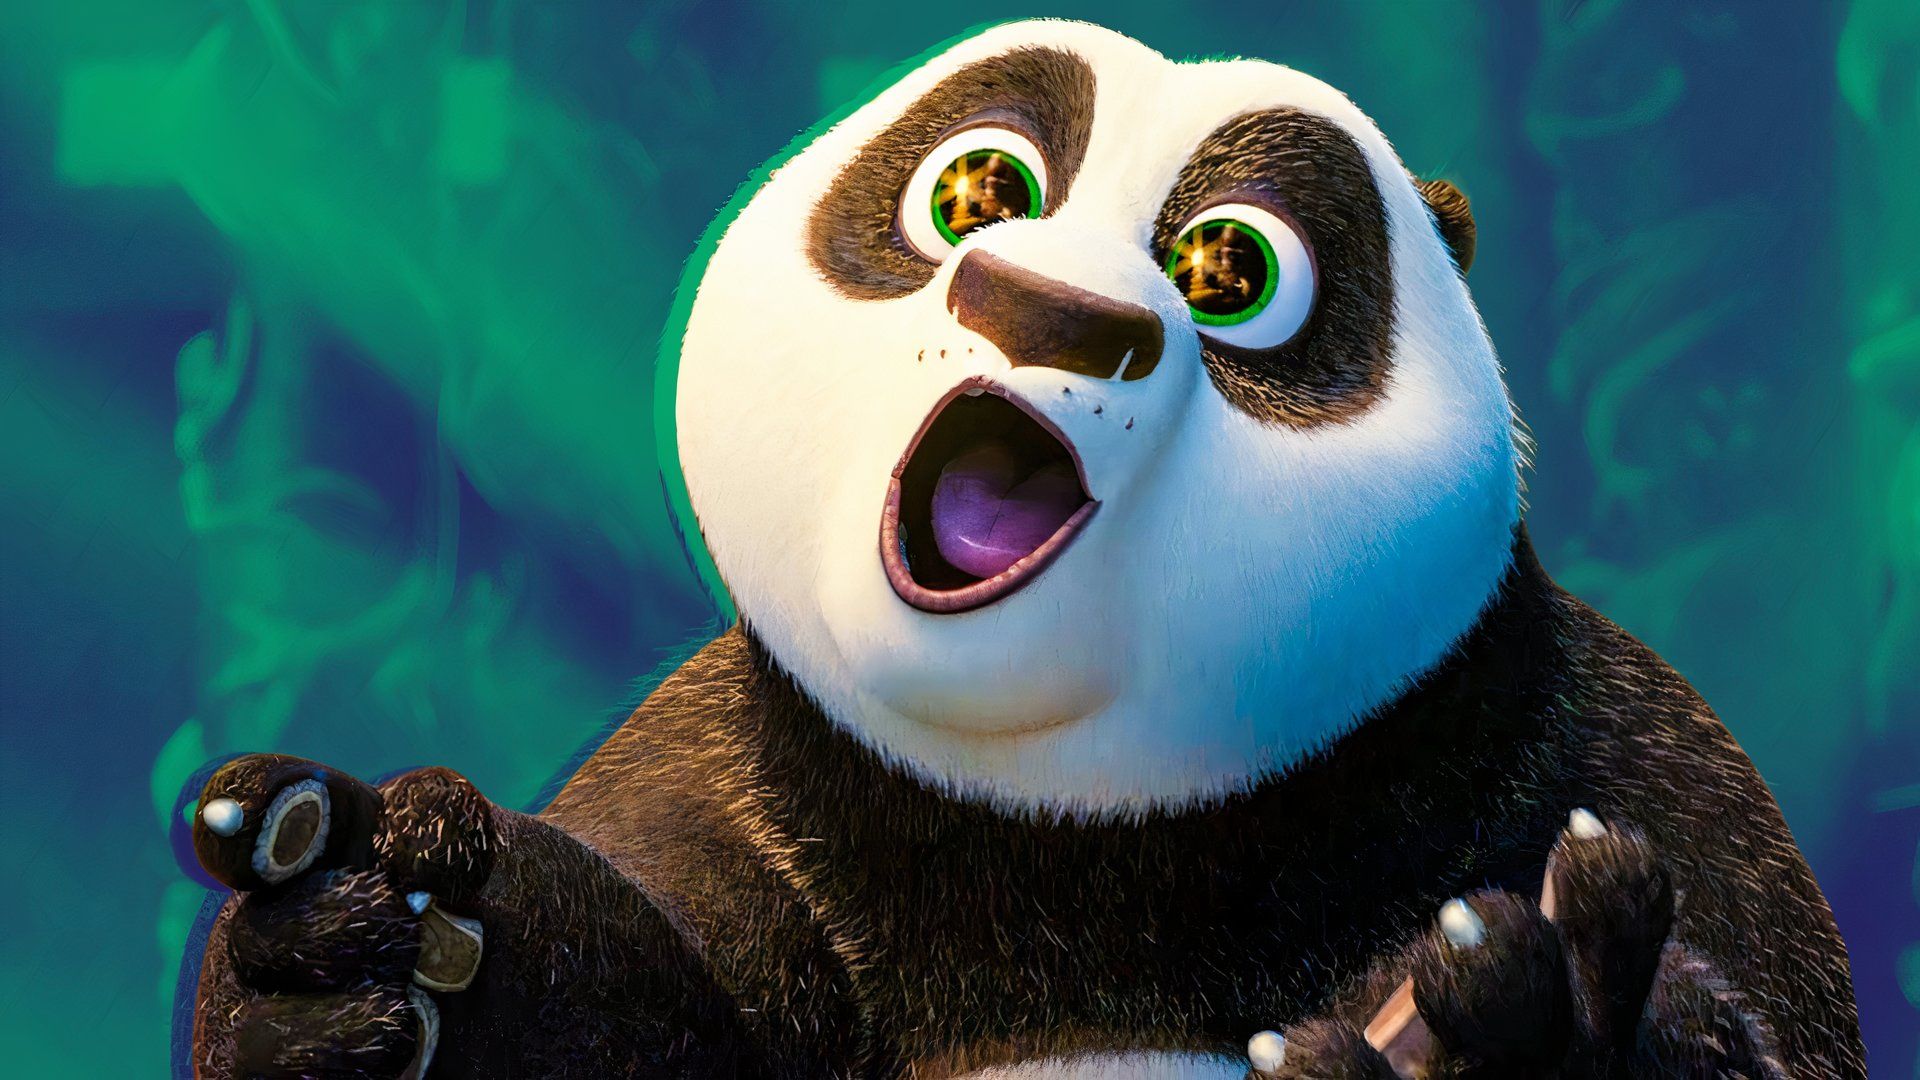 Kung Fu Panda 5 Will Be ‘Bigger’ According to 4th Film’s Director